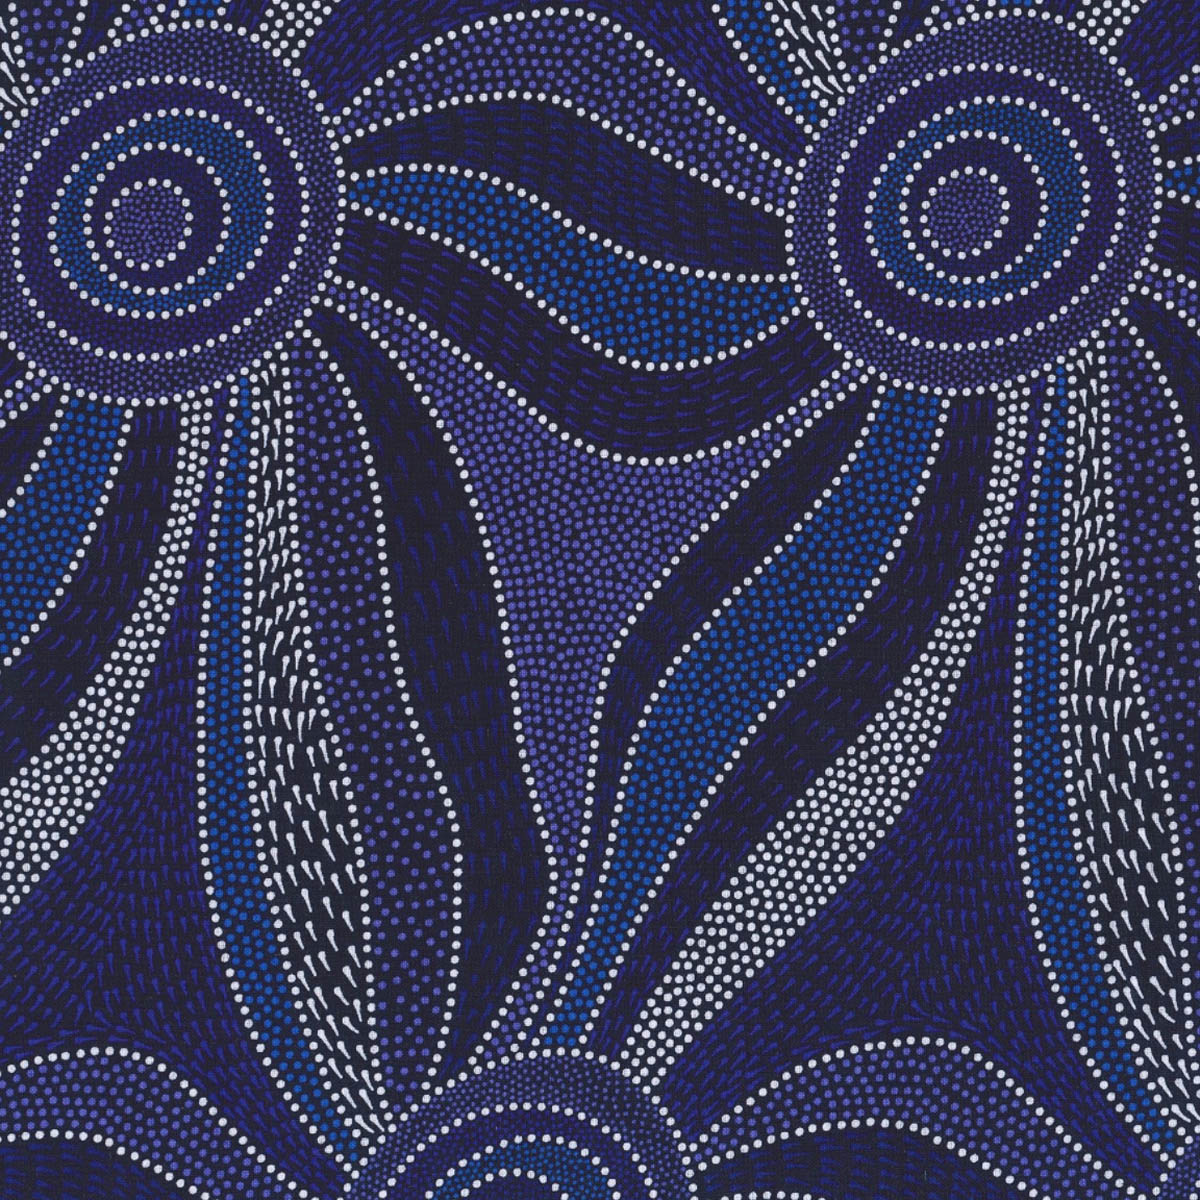 LADIES DANCING WITH WATER PAINTS BLUE by Aboriginal Artist Roseanne Morton